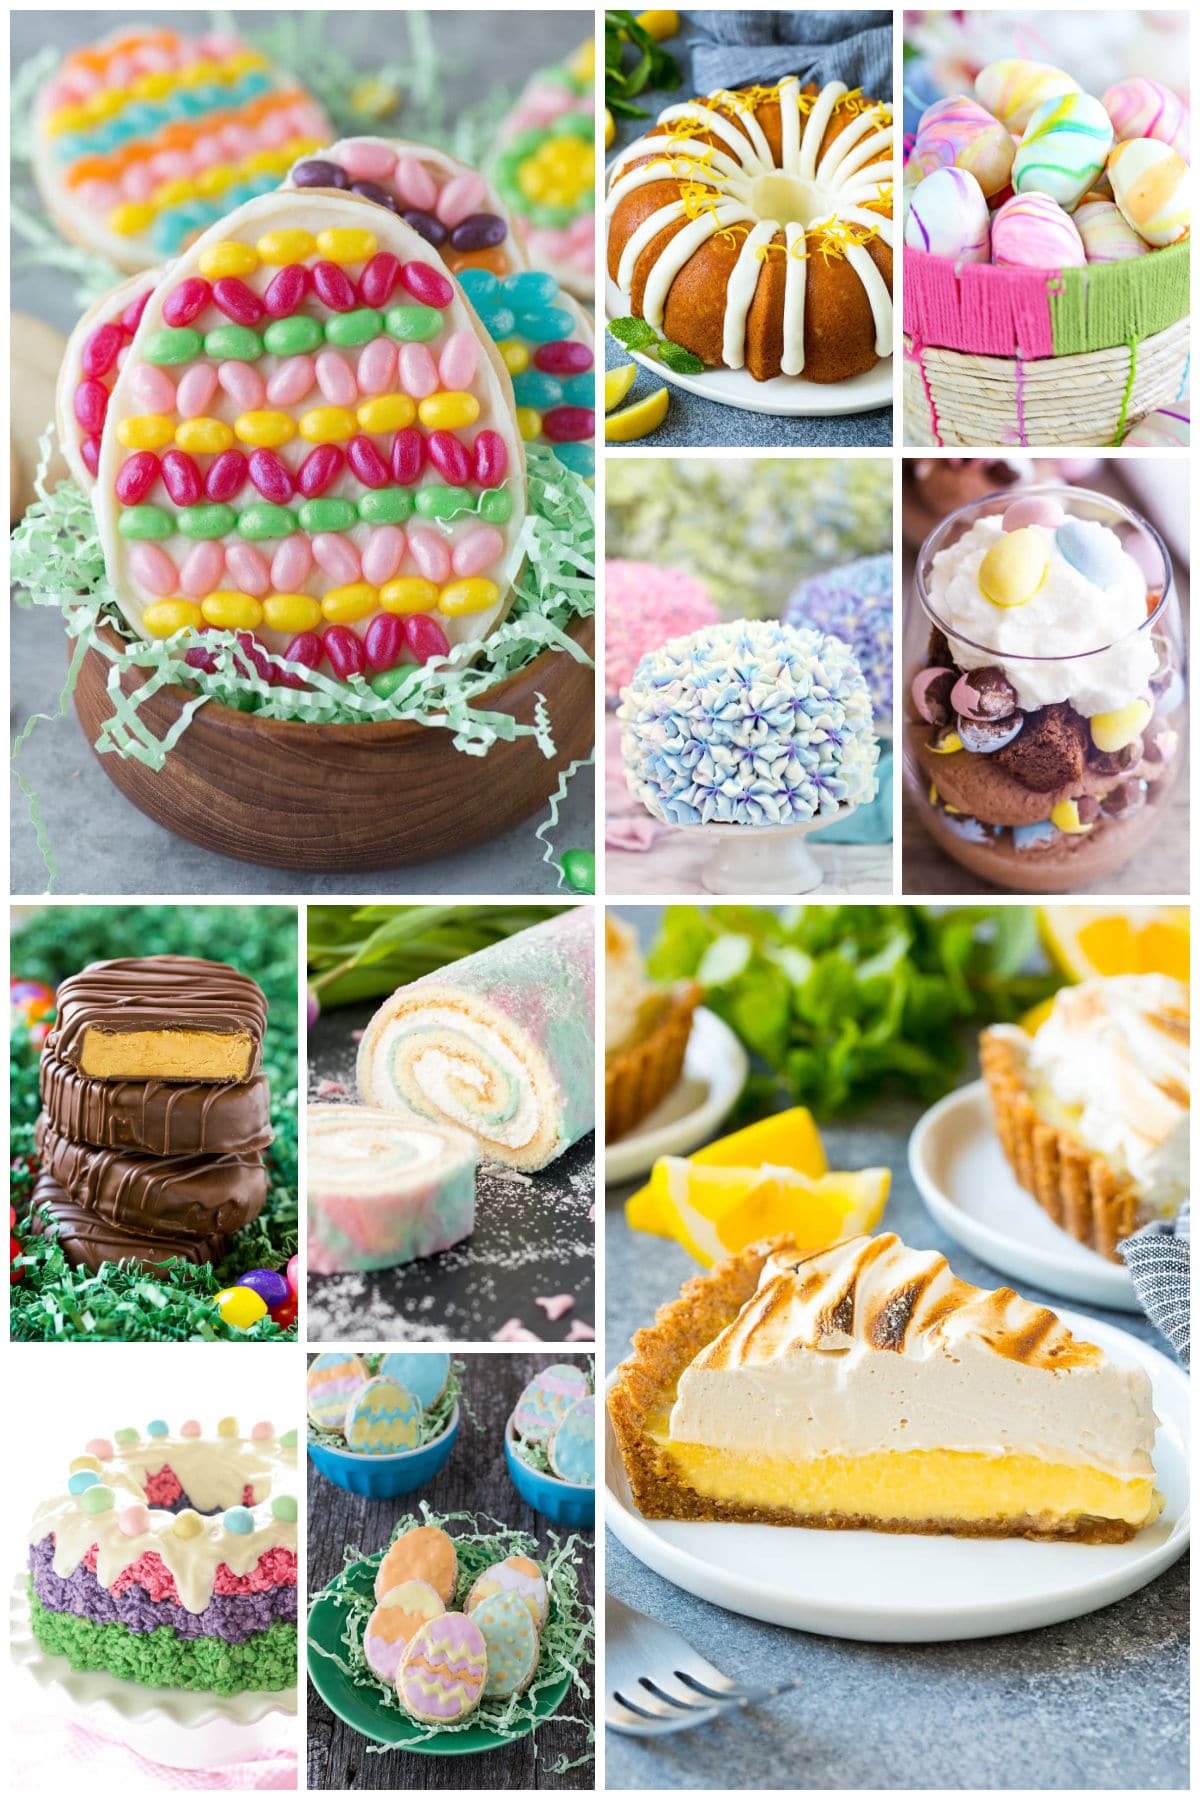 A collection of Easter treats including a lemon meringue tart, peanut butter eggs and a lemon Bundt cake.